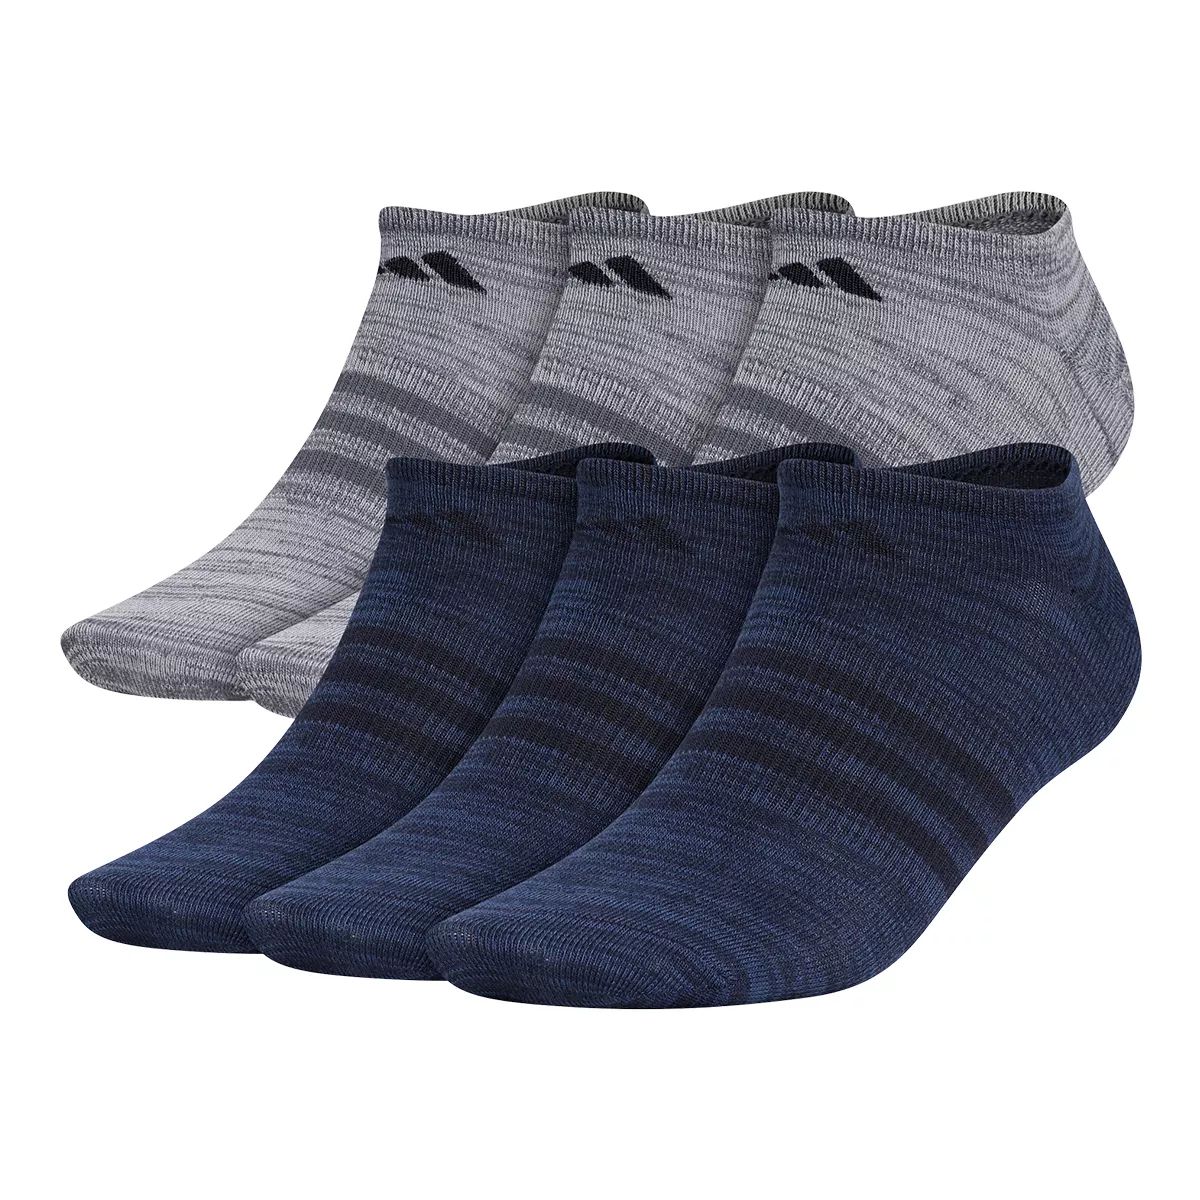 Adidas Men's Superlite II No-Show Socks, Moisture-Wicking, 6-Pack ...